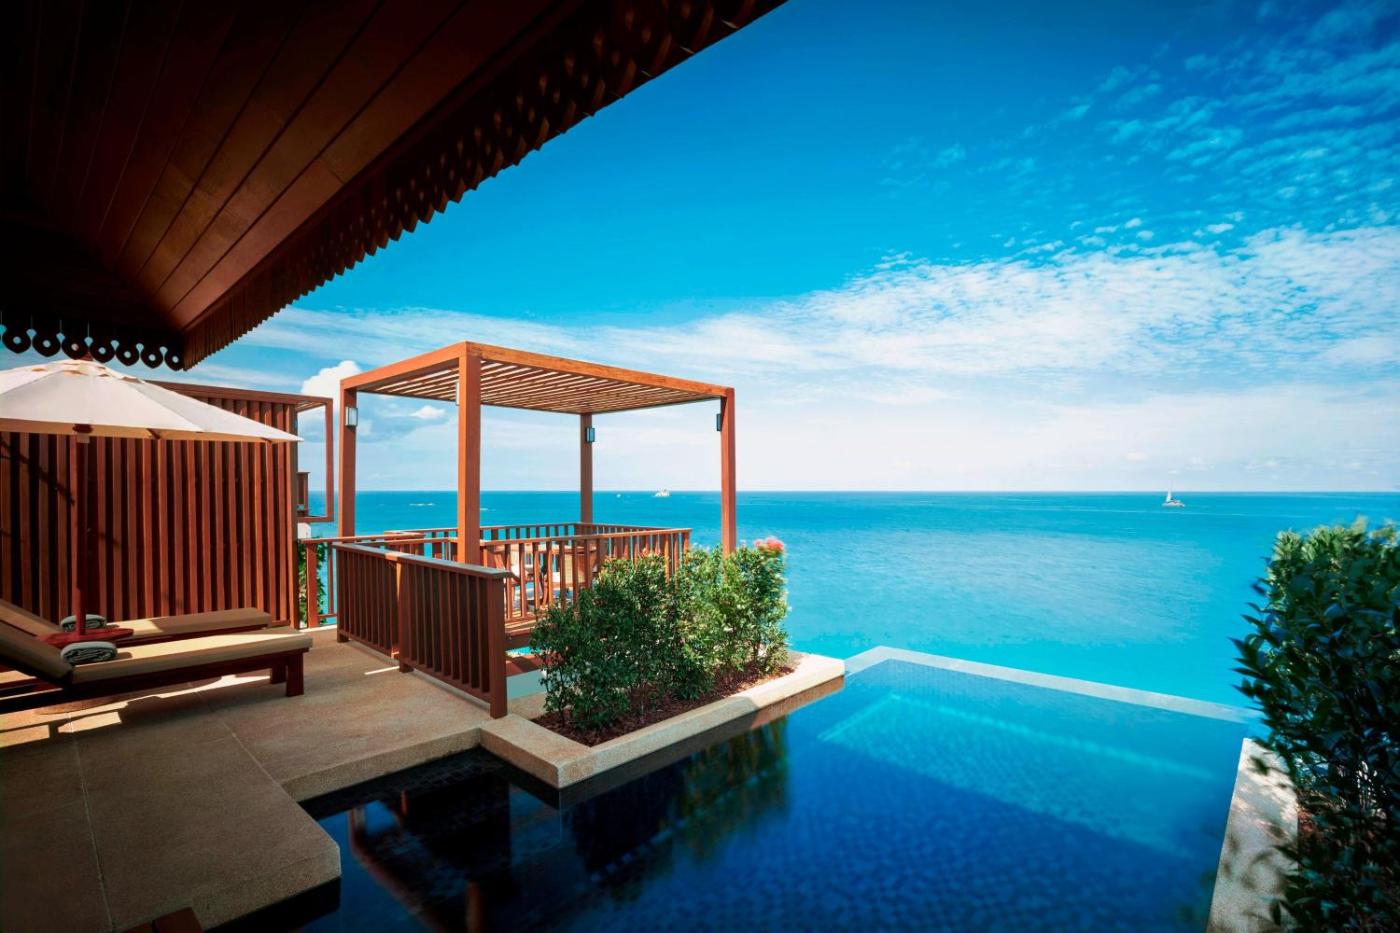 Hotel with private pool - The Ritz-Carlton, Koh Samui